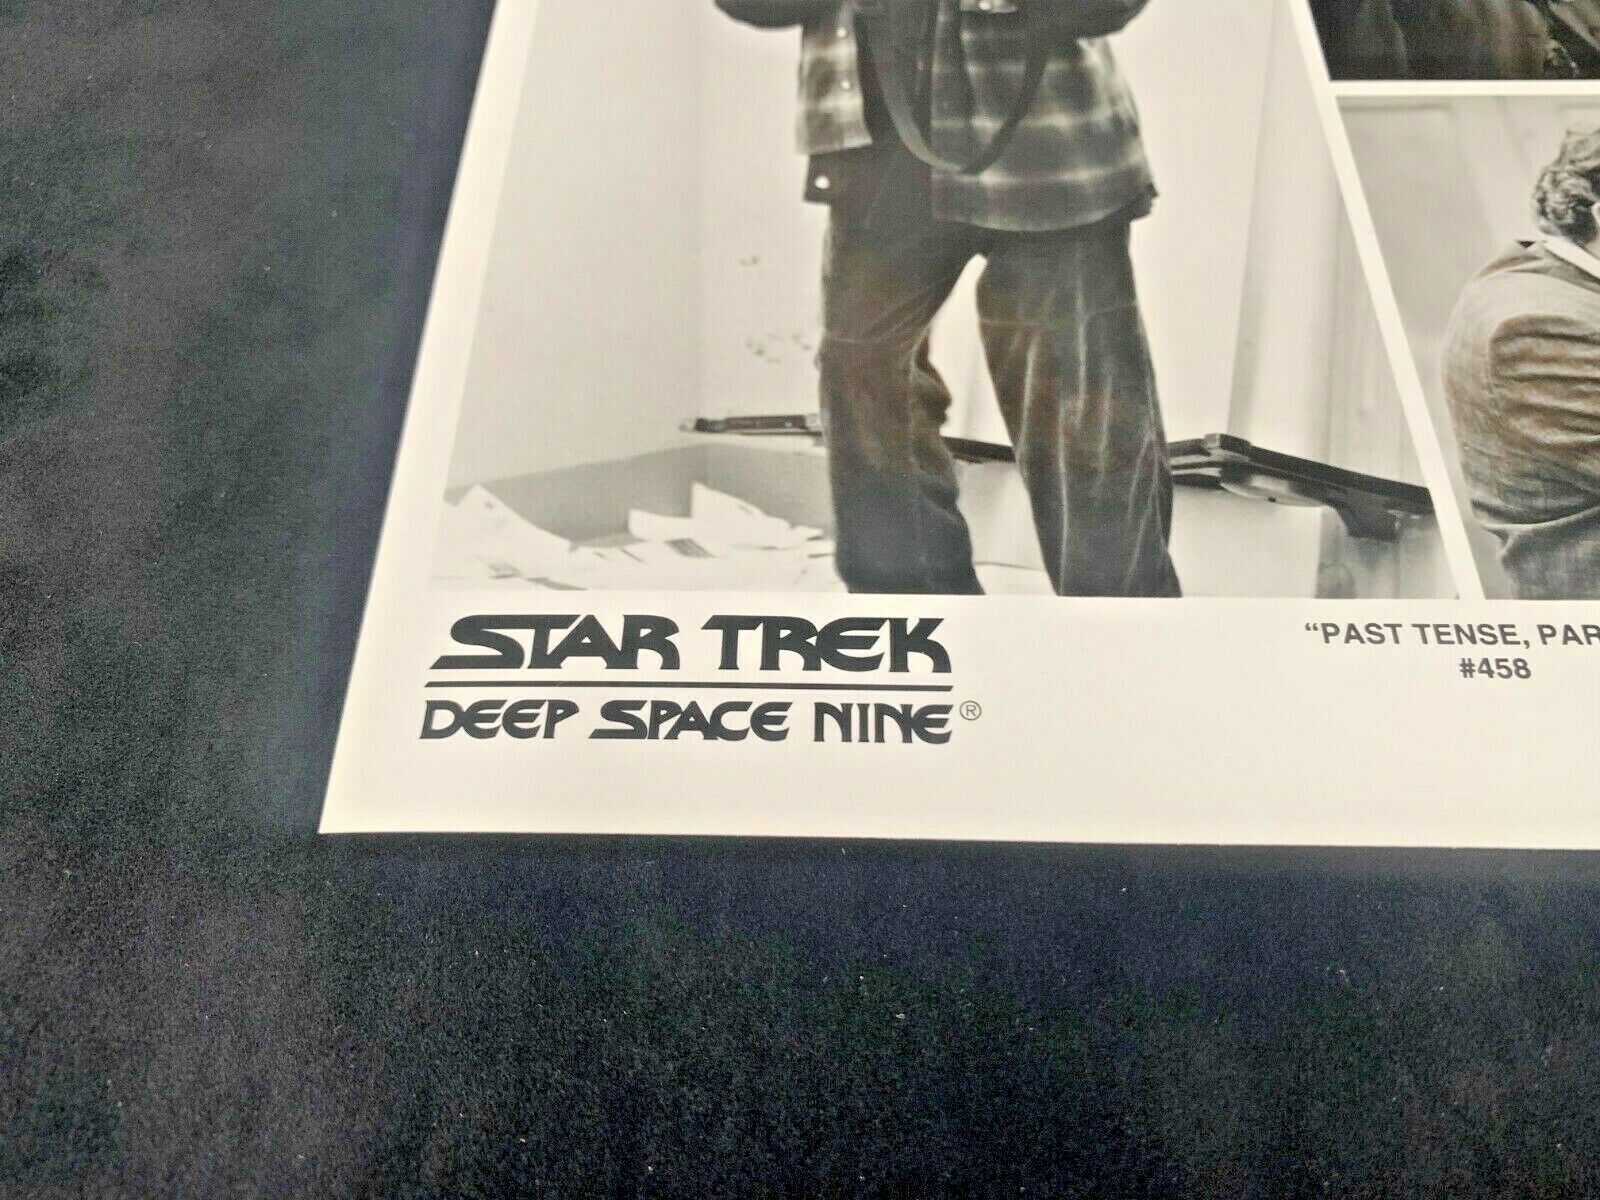 Star Trek Deep Space Nine 8x10 B&W Photo of Past Tense Part 2 458